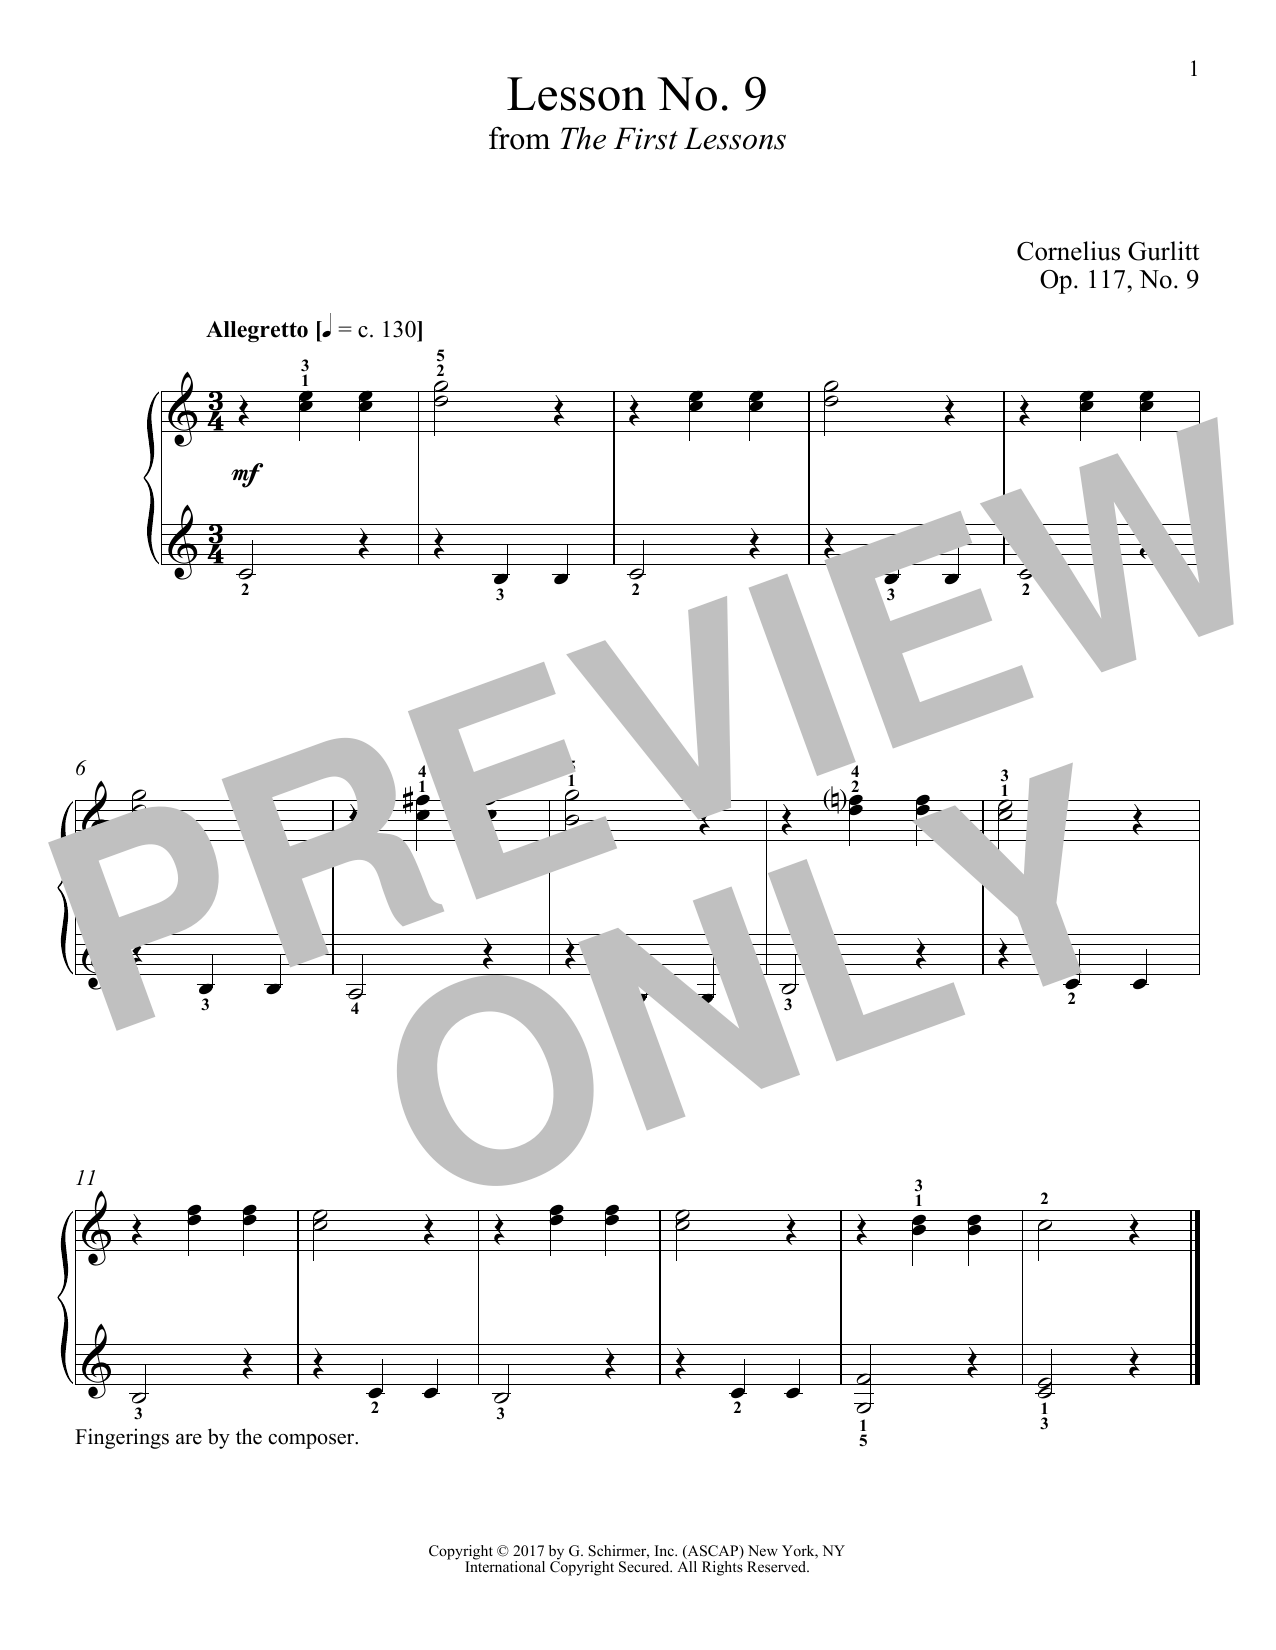 Cornelius Gurlitt Allegretto, Op. 117, No. 9 Sheet Music Notes & Chords for Piano - Download or Print PDF